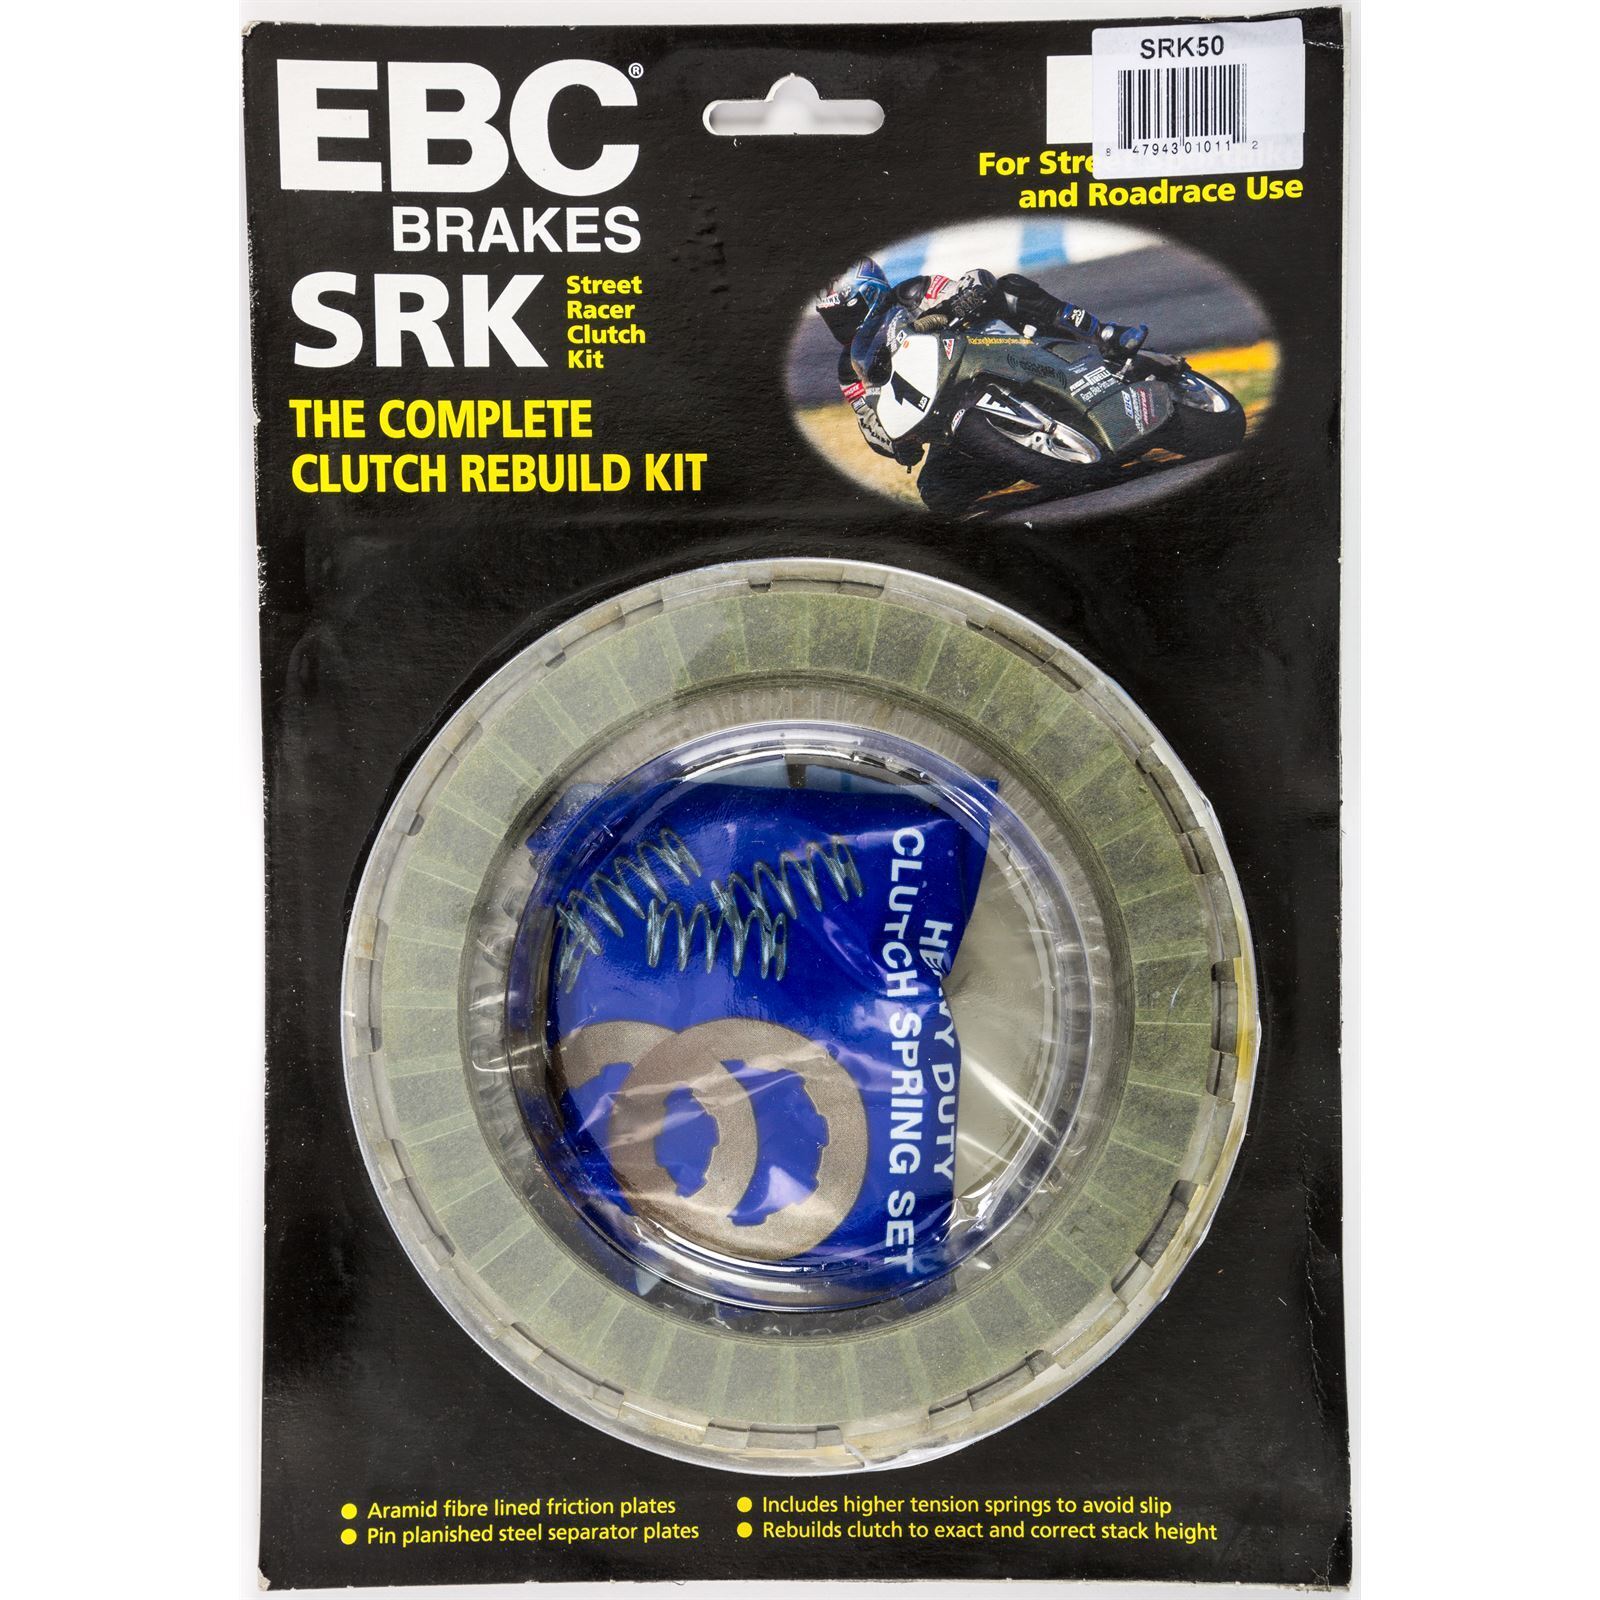 EBC Brakes SRK Complete Clutch Kit SRK50